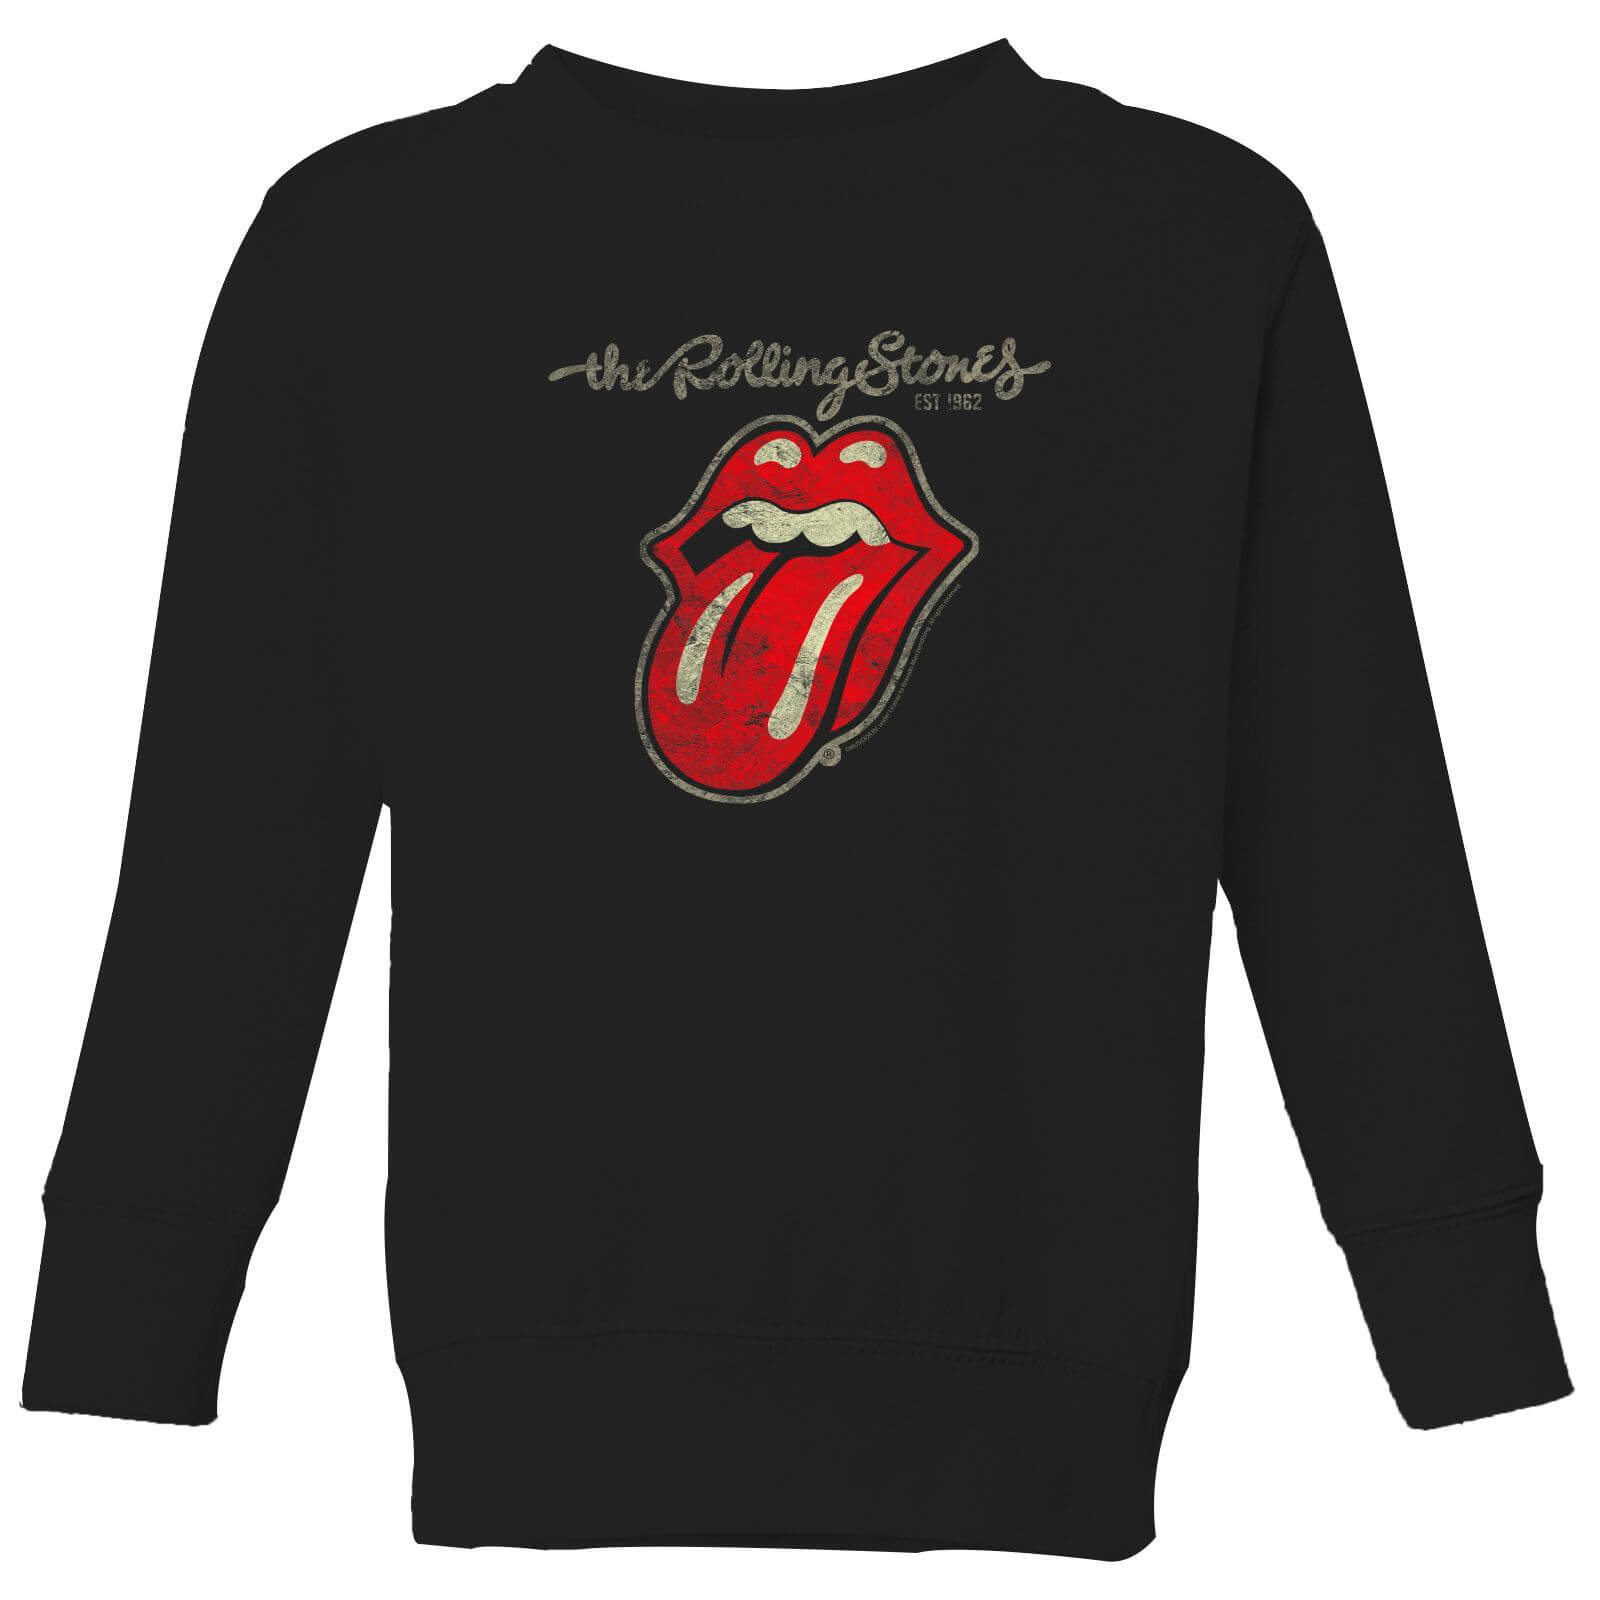 Rolling Stones Plastered Tongue Kids' Sweatshirt - Black - 11-12 Years